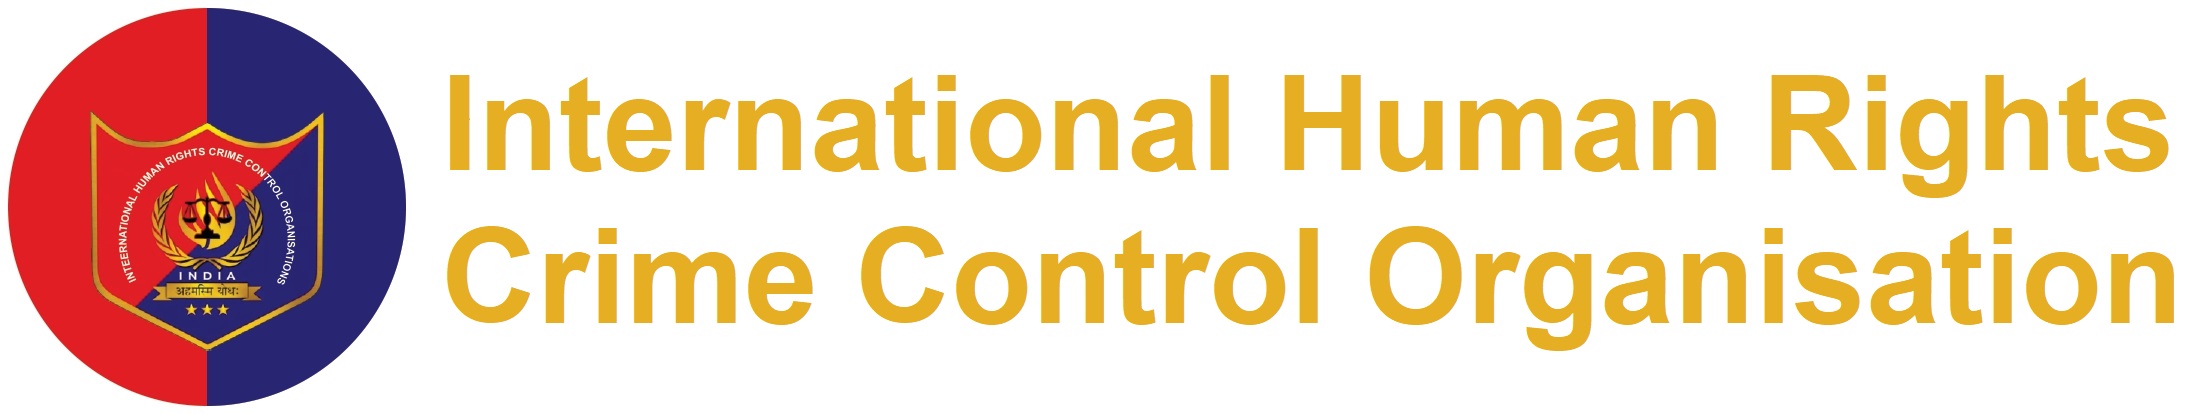 International Human Rights Crime Control Council Organisation